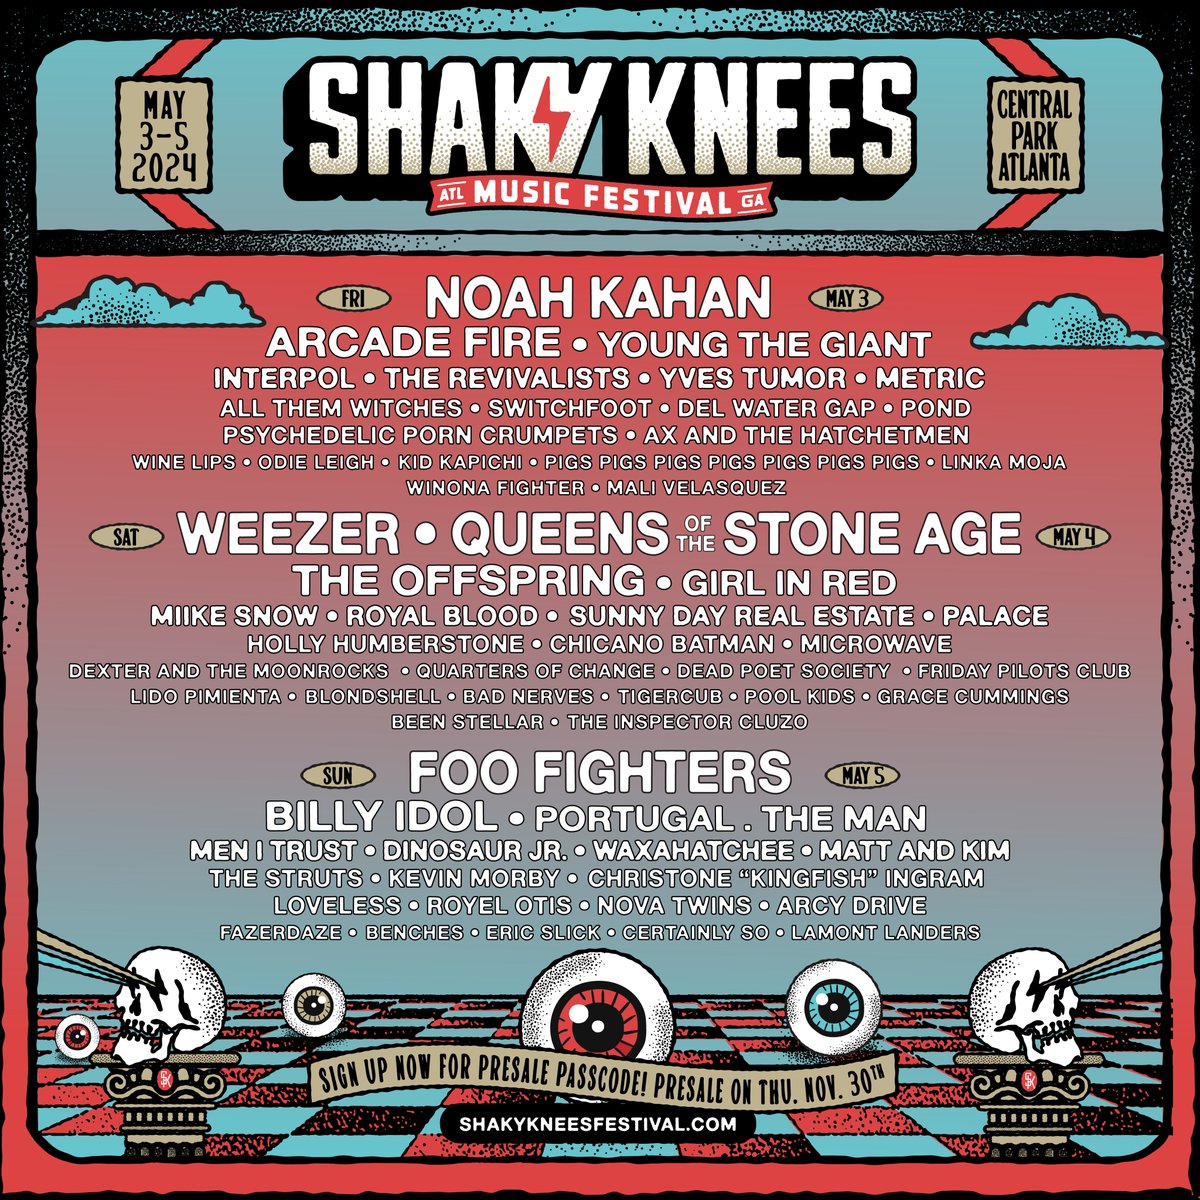 Shaky Knees Festival ⚡️ 
May 4, 2024 | Atlanta, GA 

Sign up for the presale at shakykneesfestival.com.